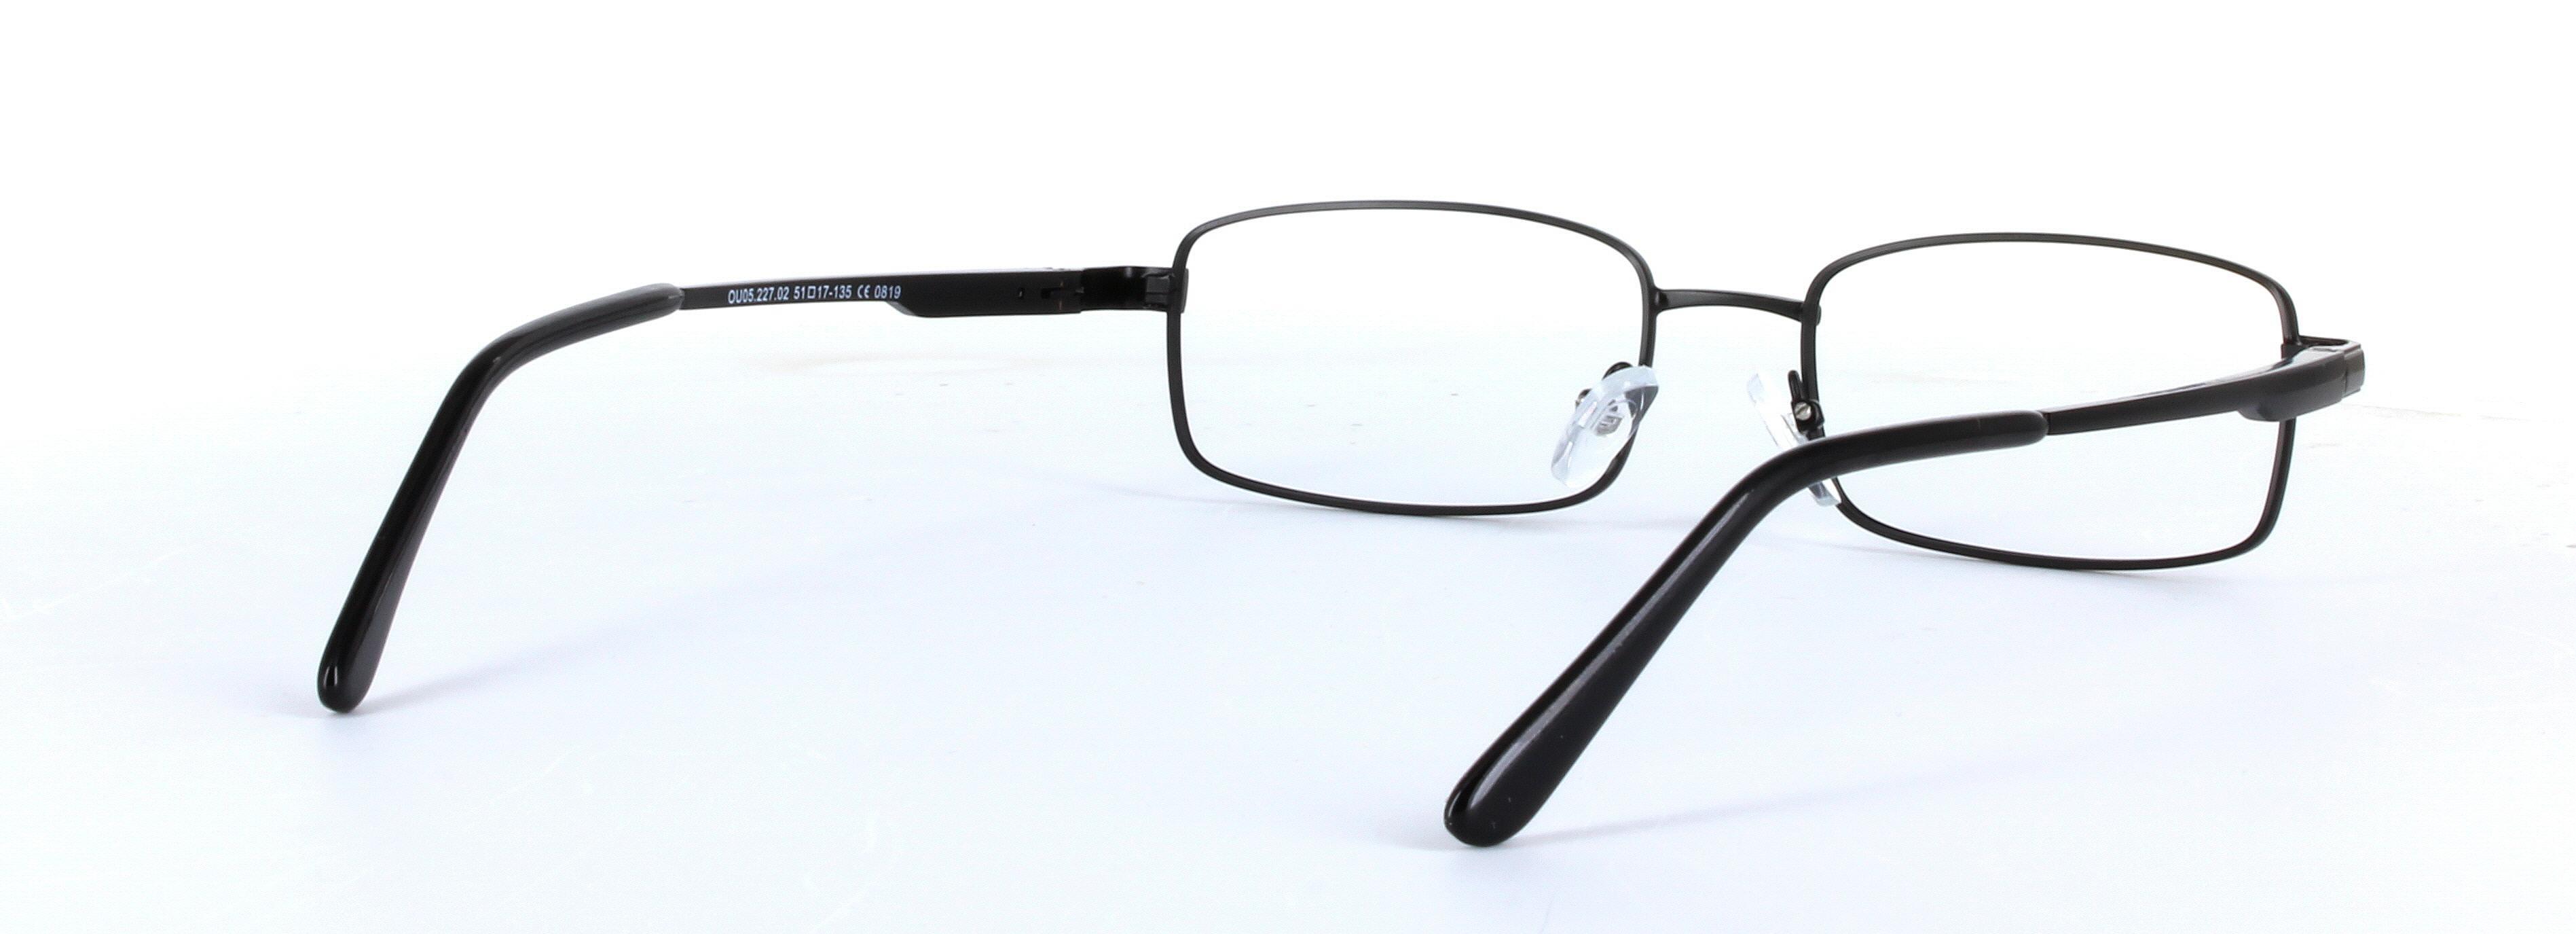 Kriston Black Full Rim Rectangular Metal Glasses - Image View 4